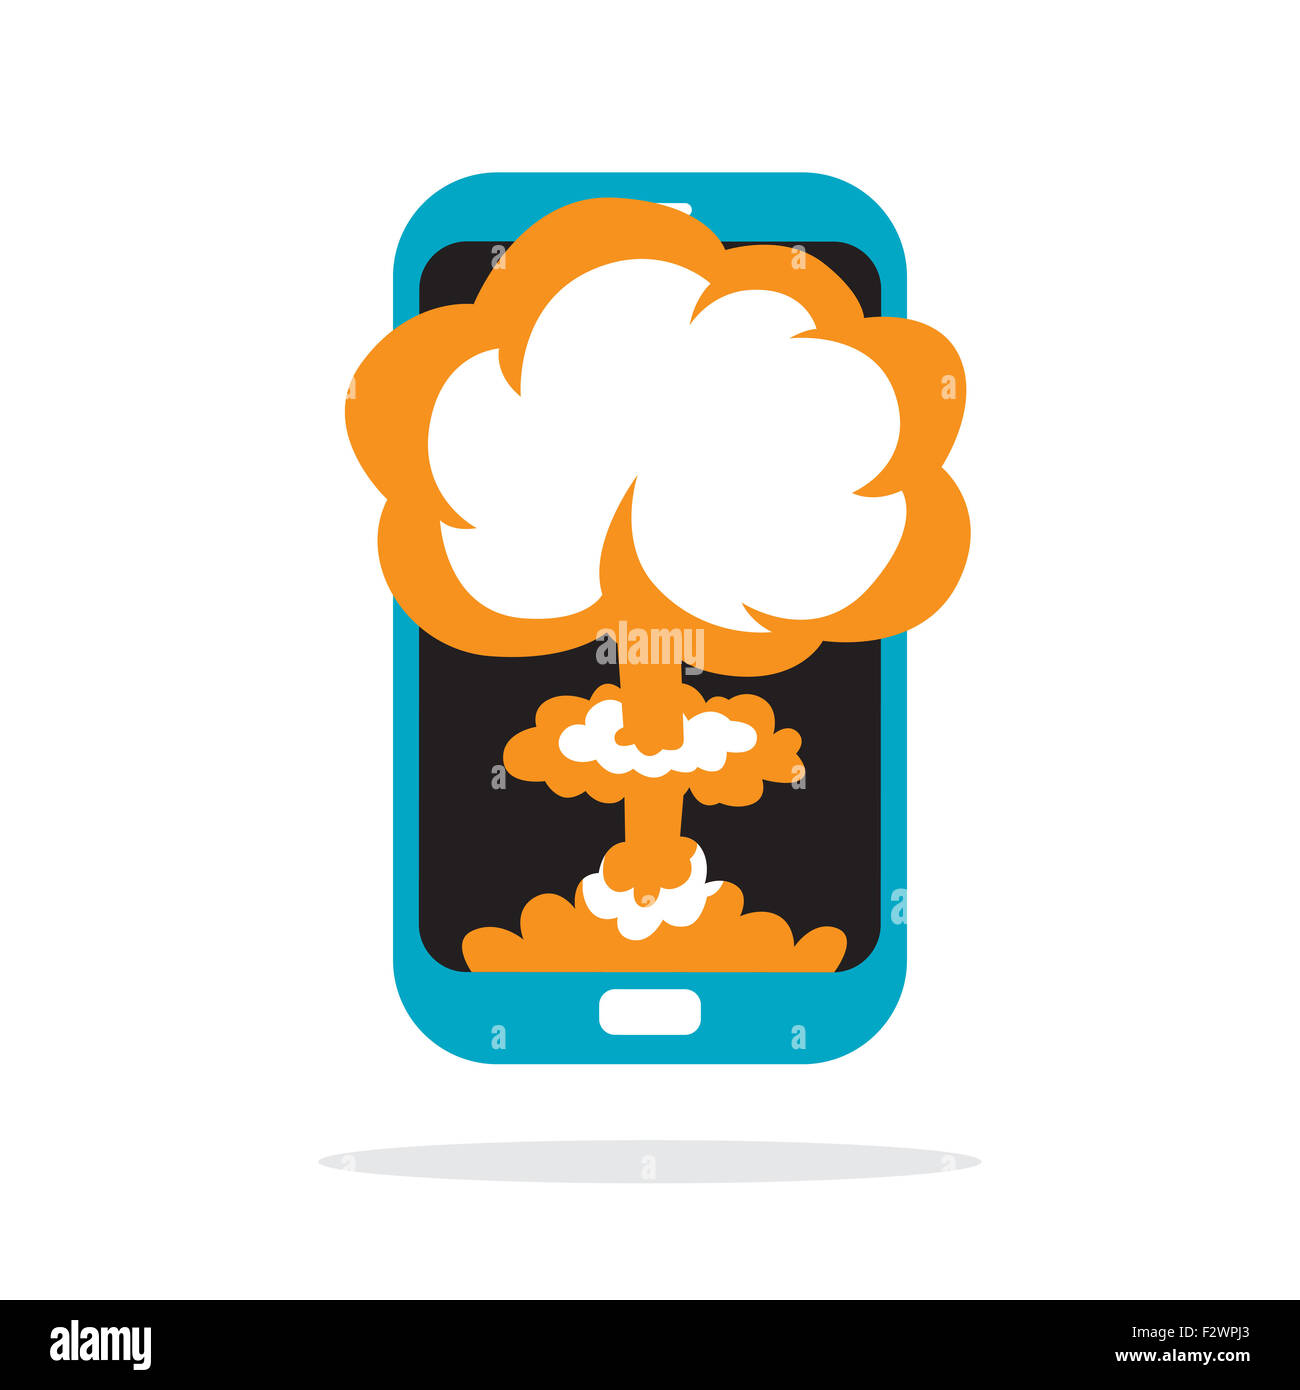 Vector cartoon illustration of a nuclear explosion on a phone. Stock Photo